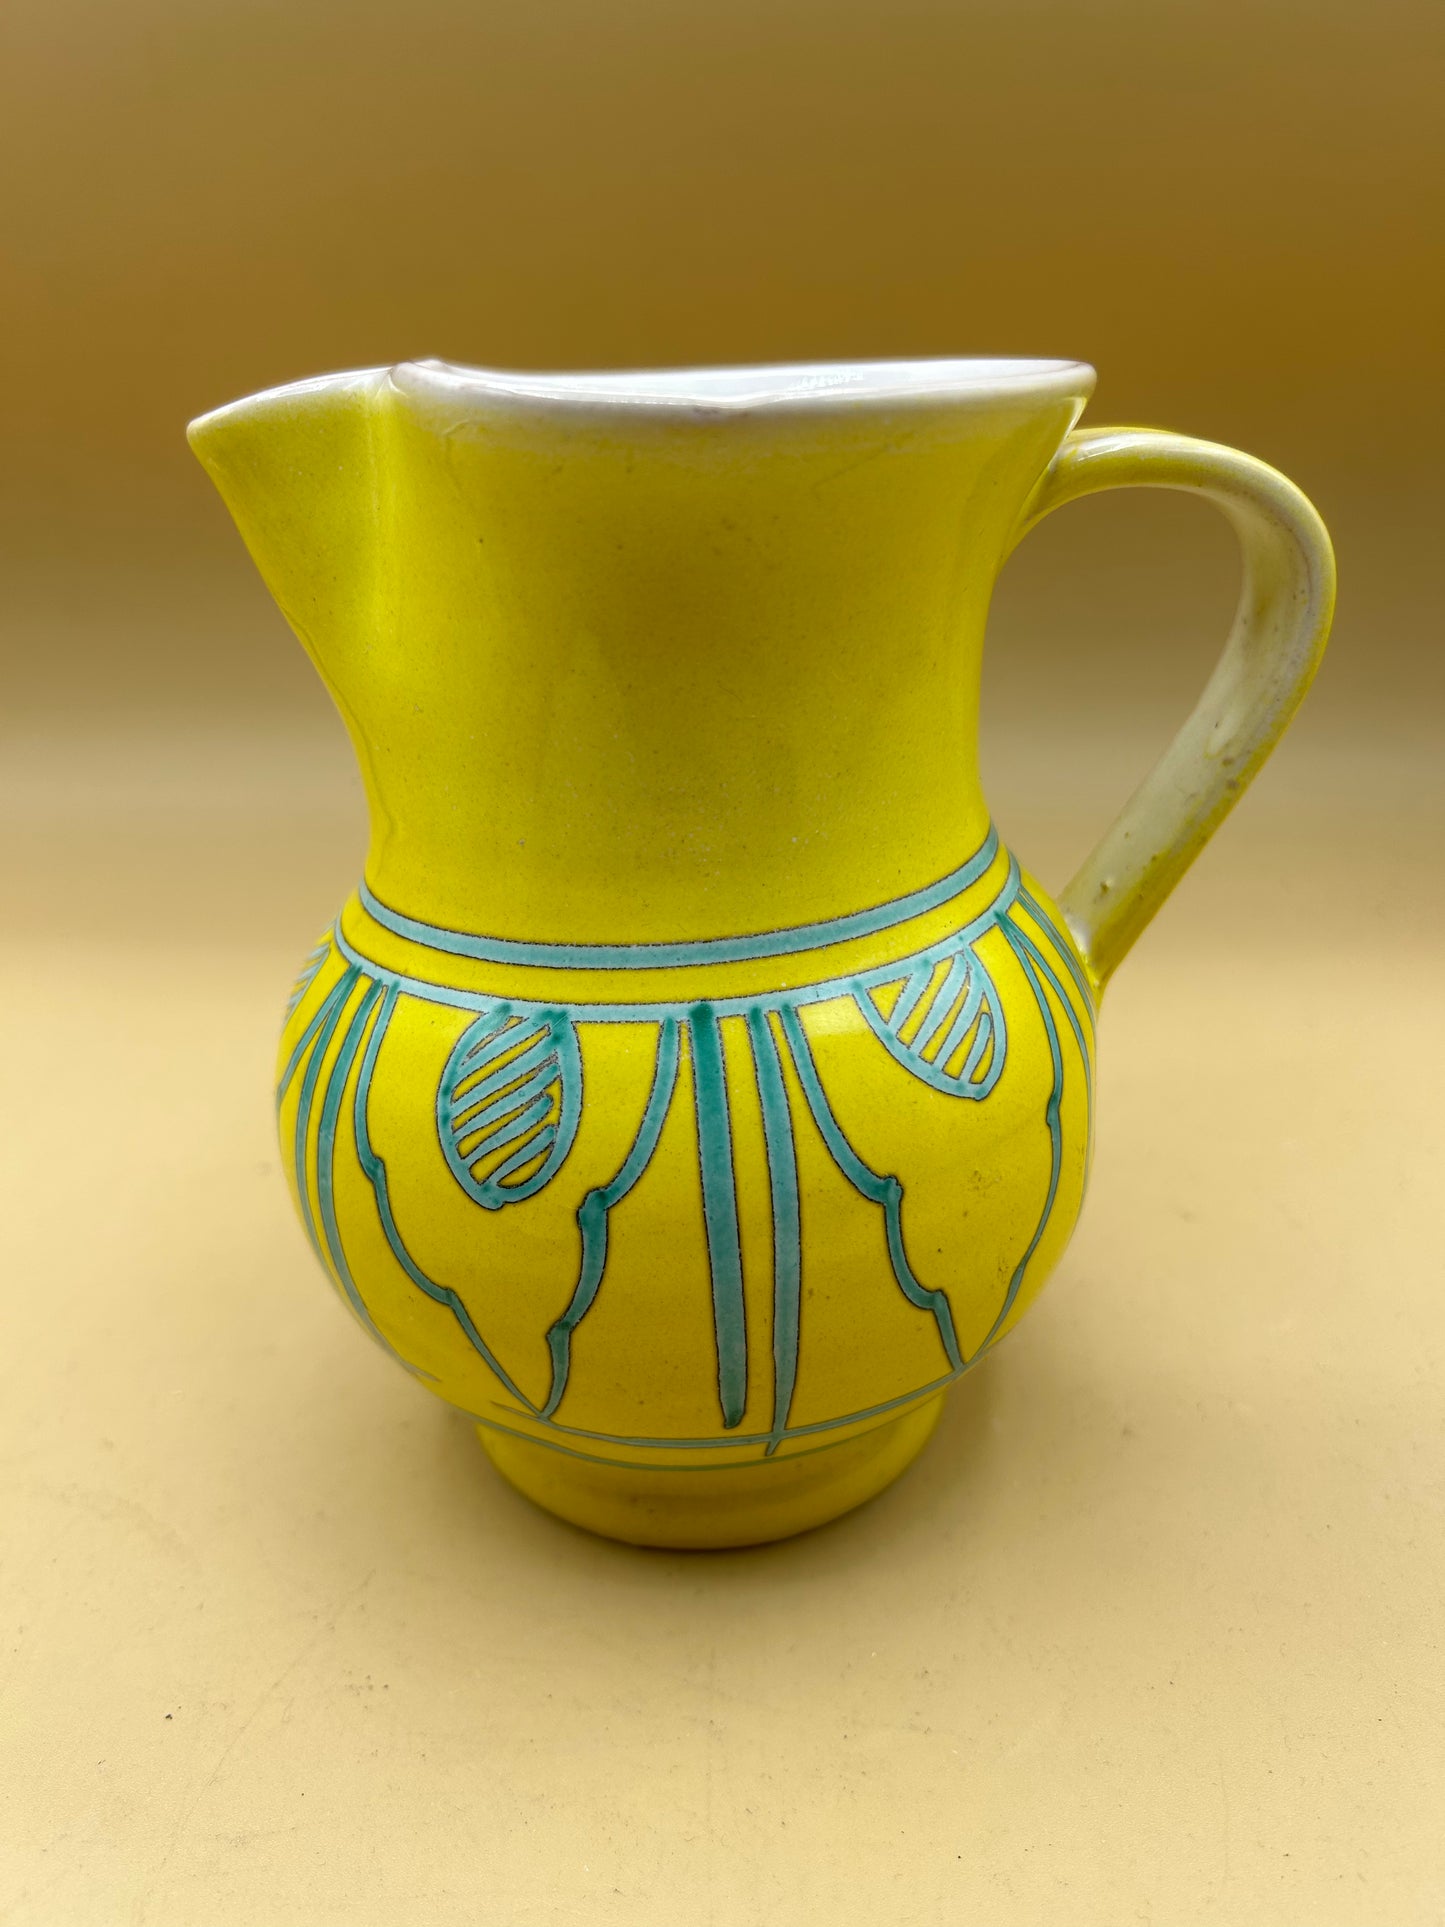 Hand-painted yellow ceramic jug